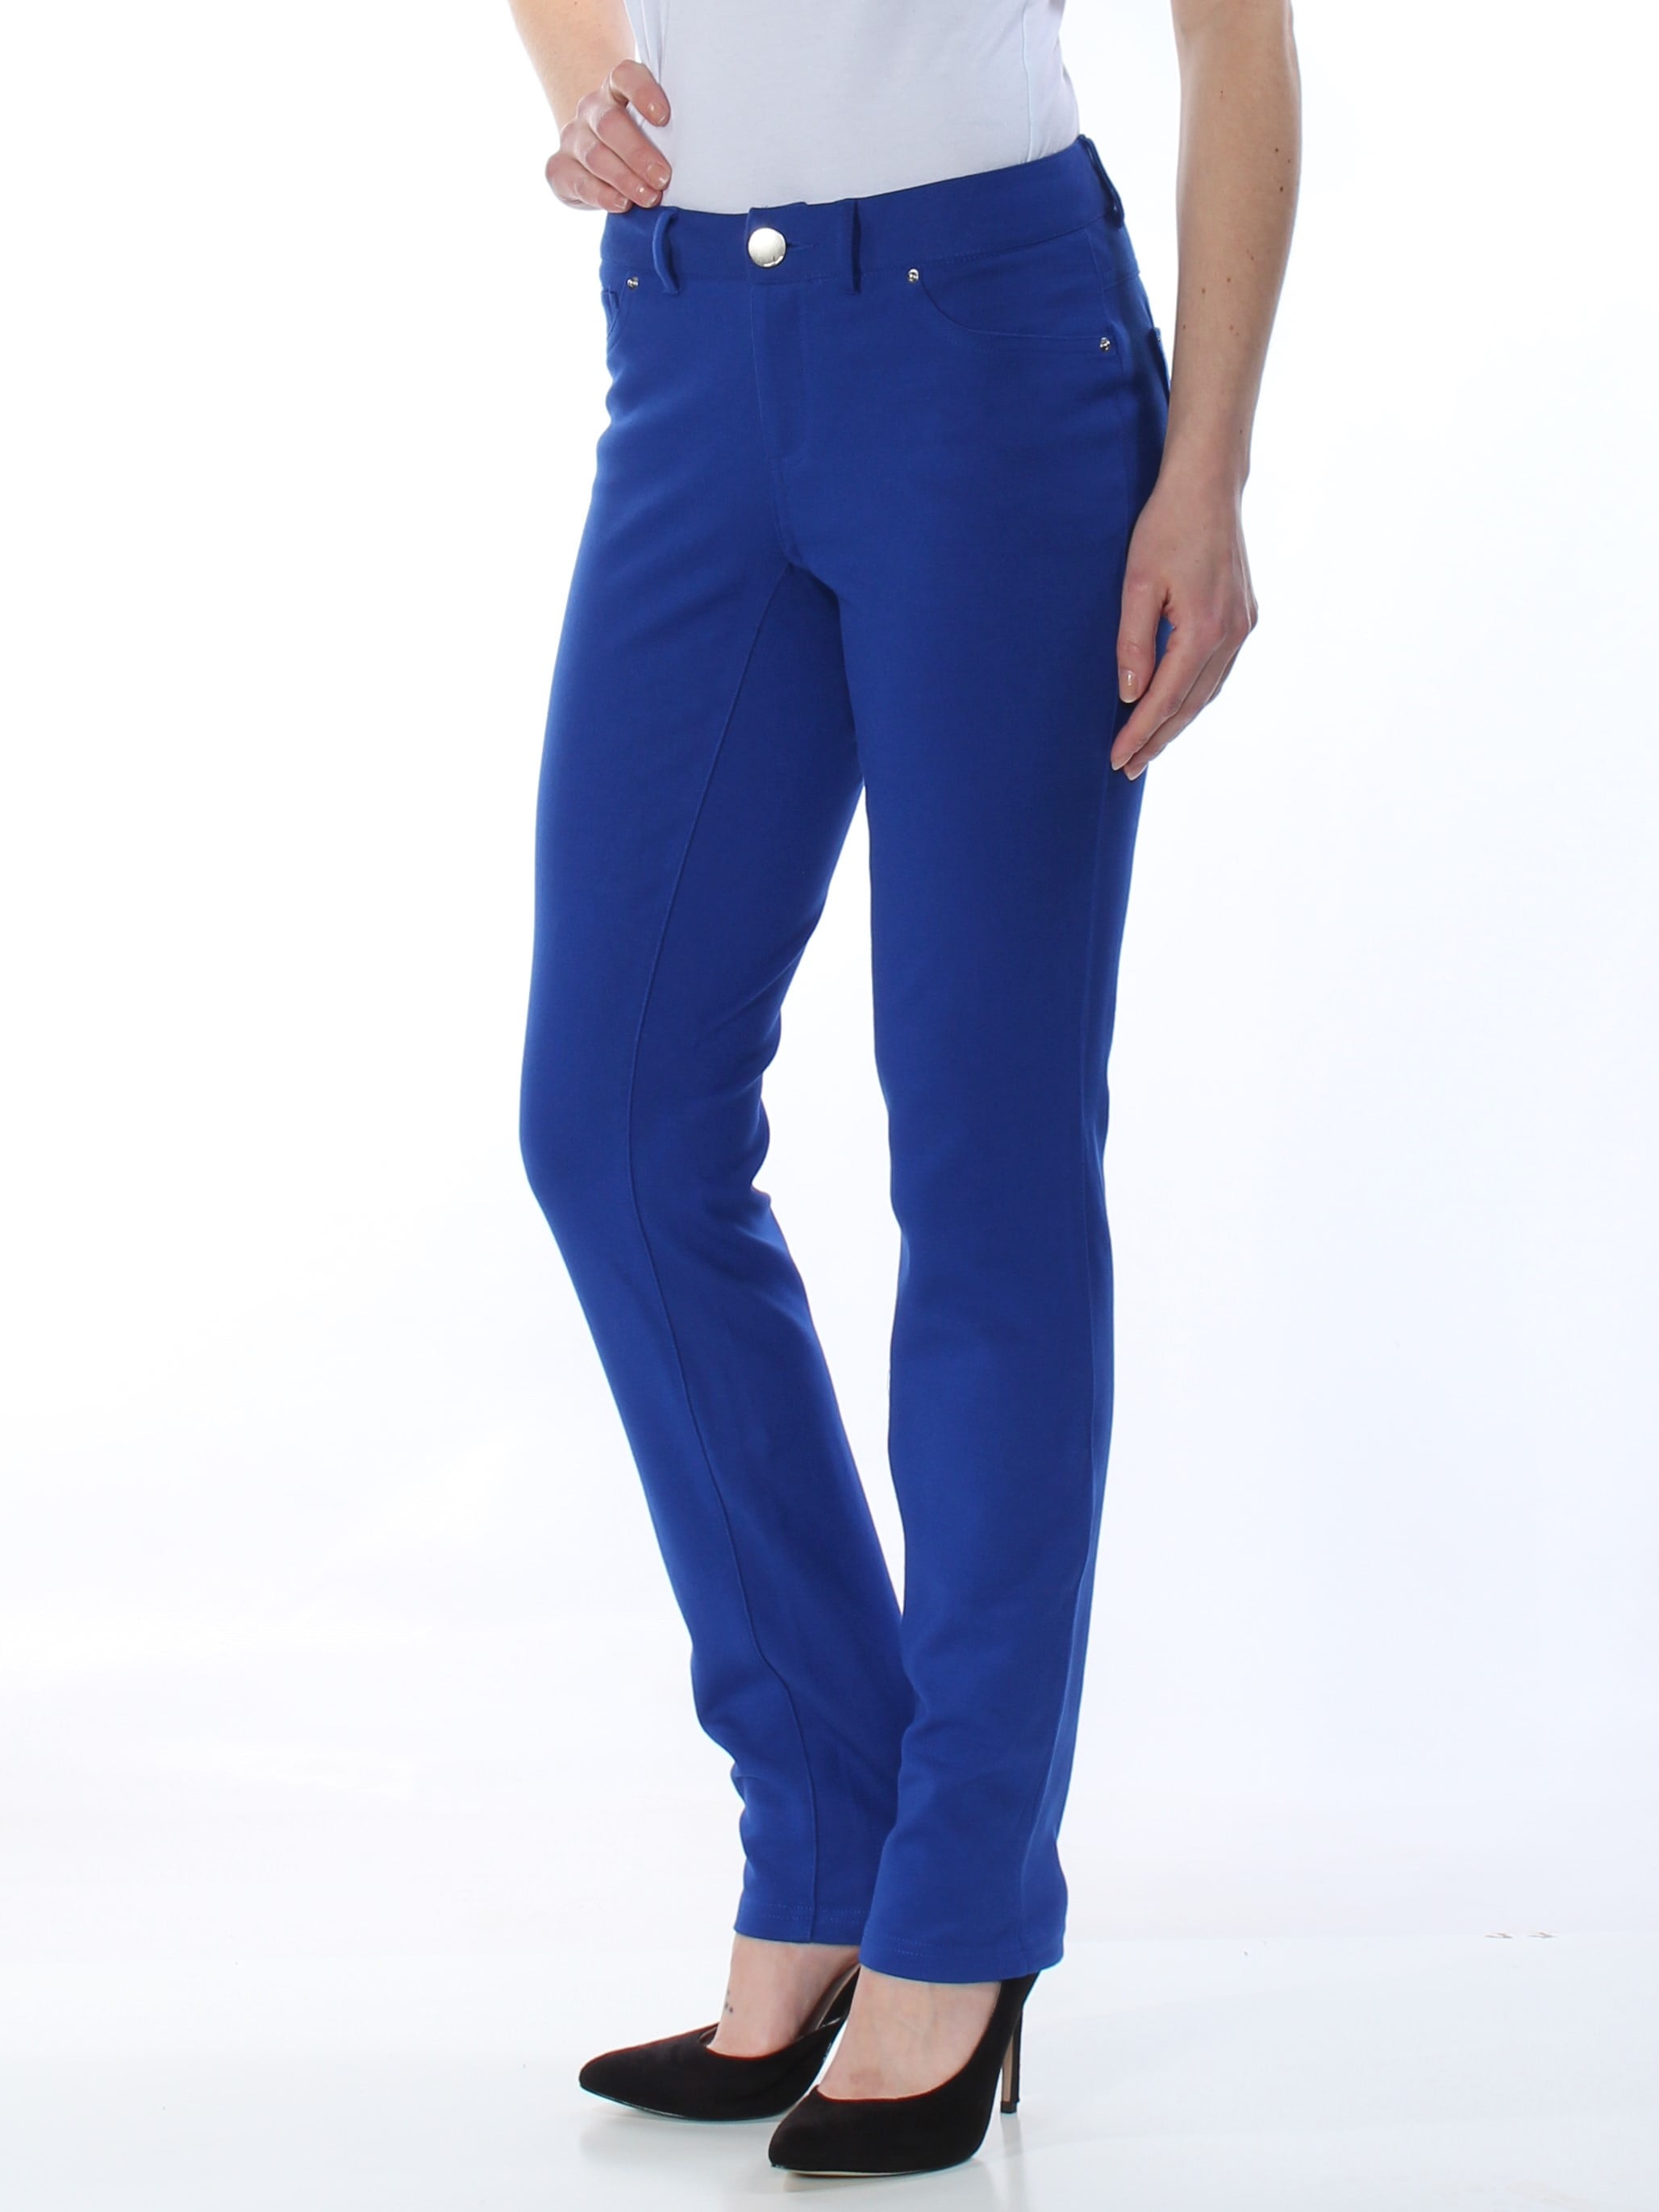 INC - INC Womens Blue Curvy Ponte Skinny Pants Size: 0 - Walmart.com ...